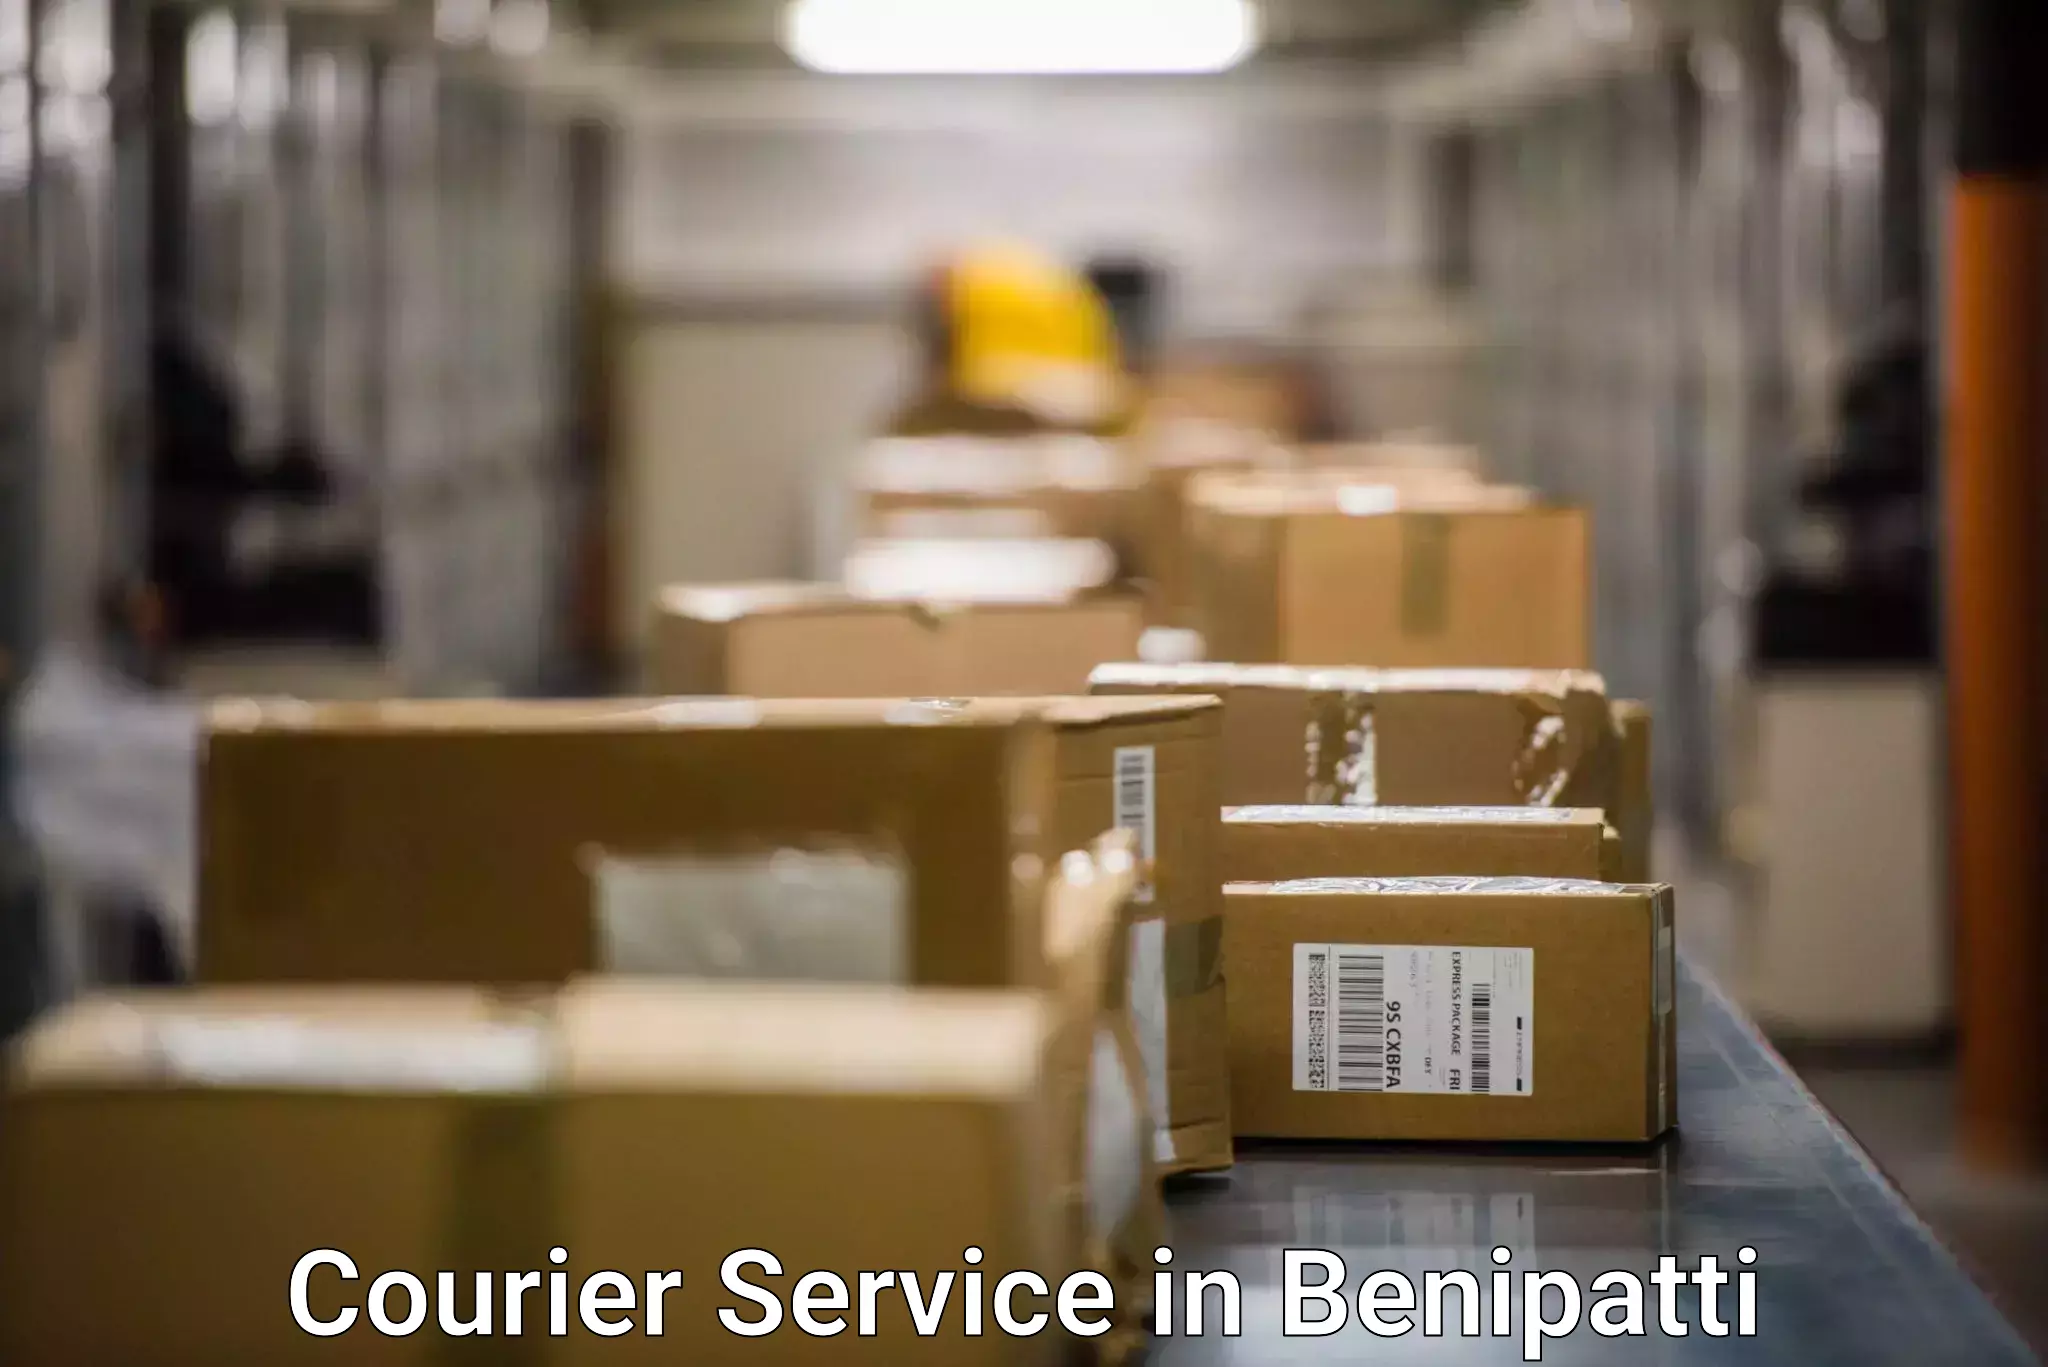 High-performance logistics in Benipatti